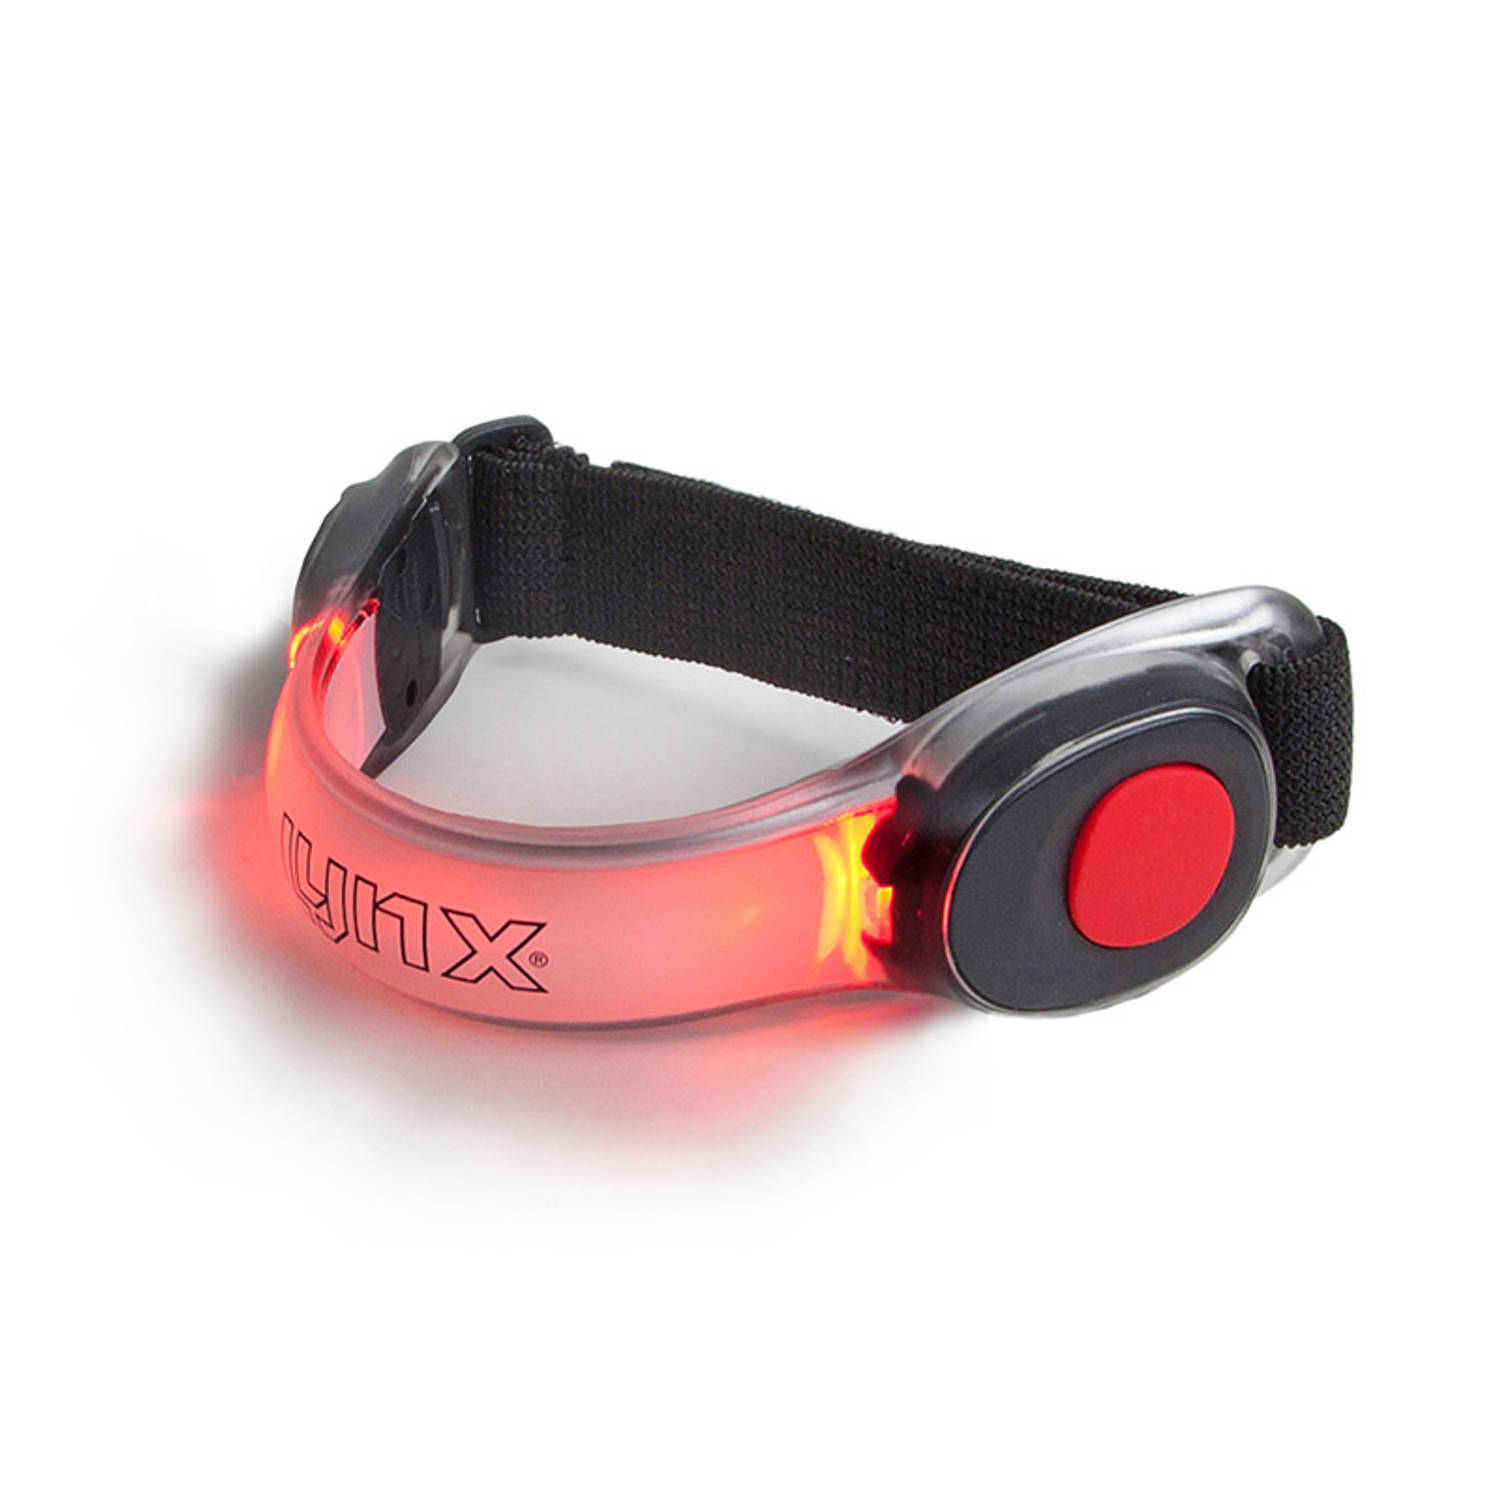 Lynx LED armband waterdicht unisex rood-zwart